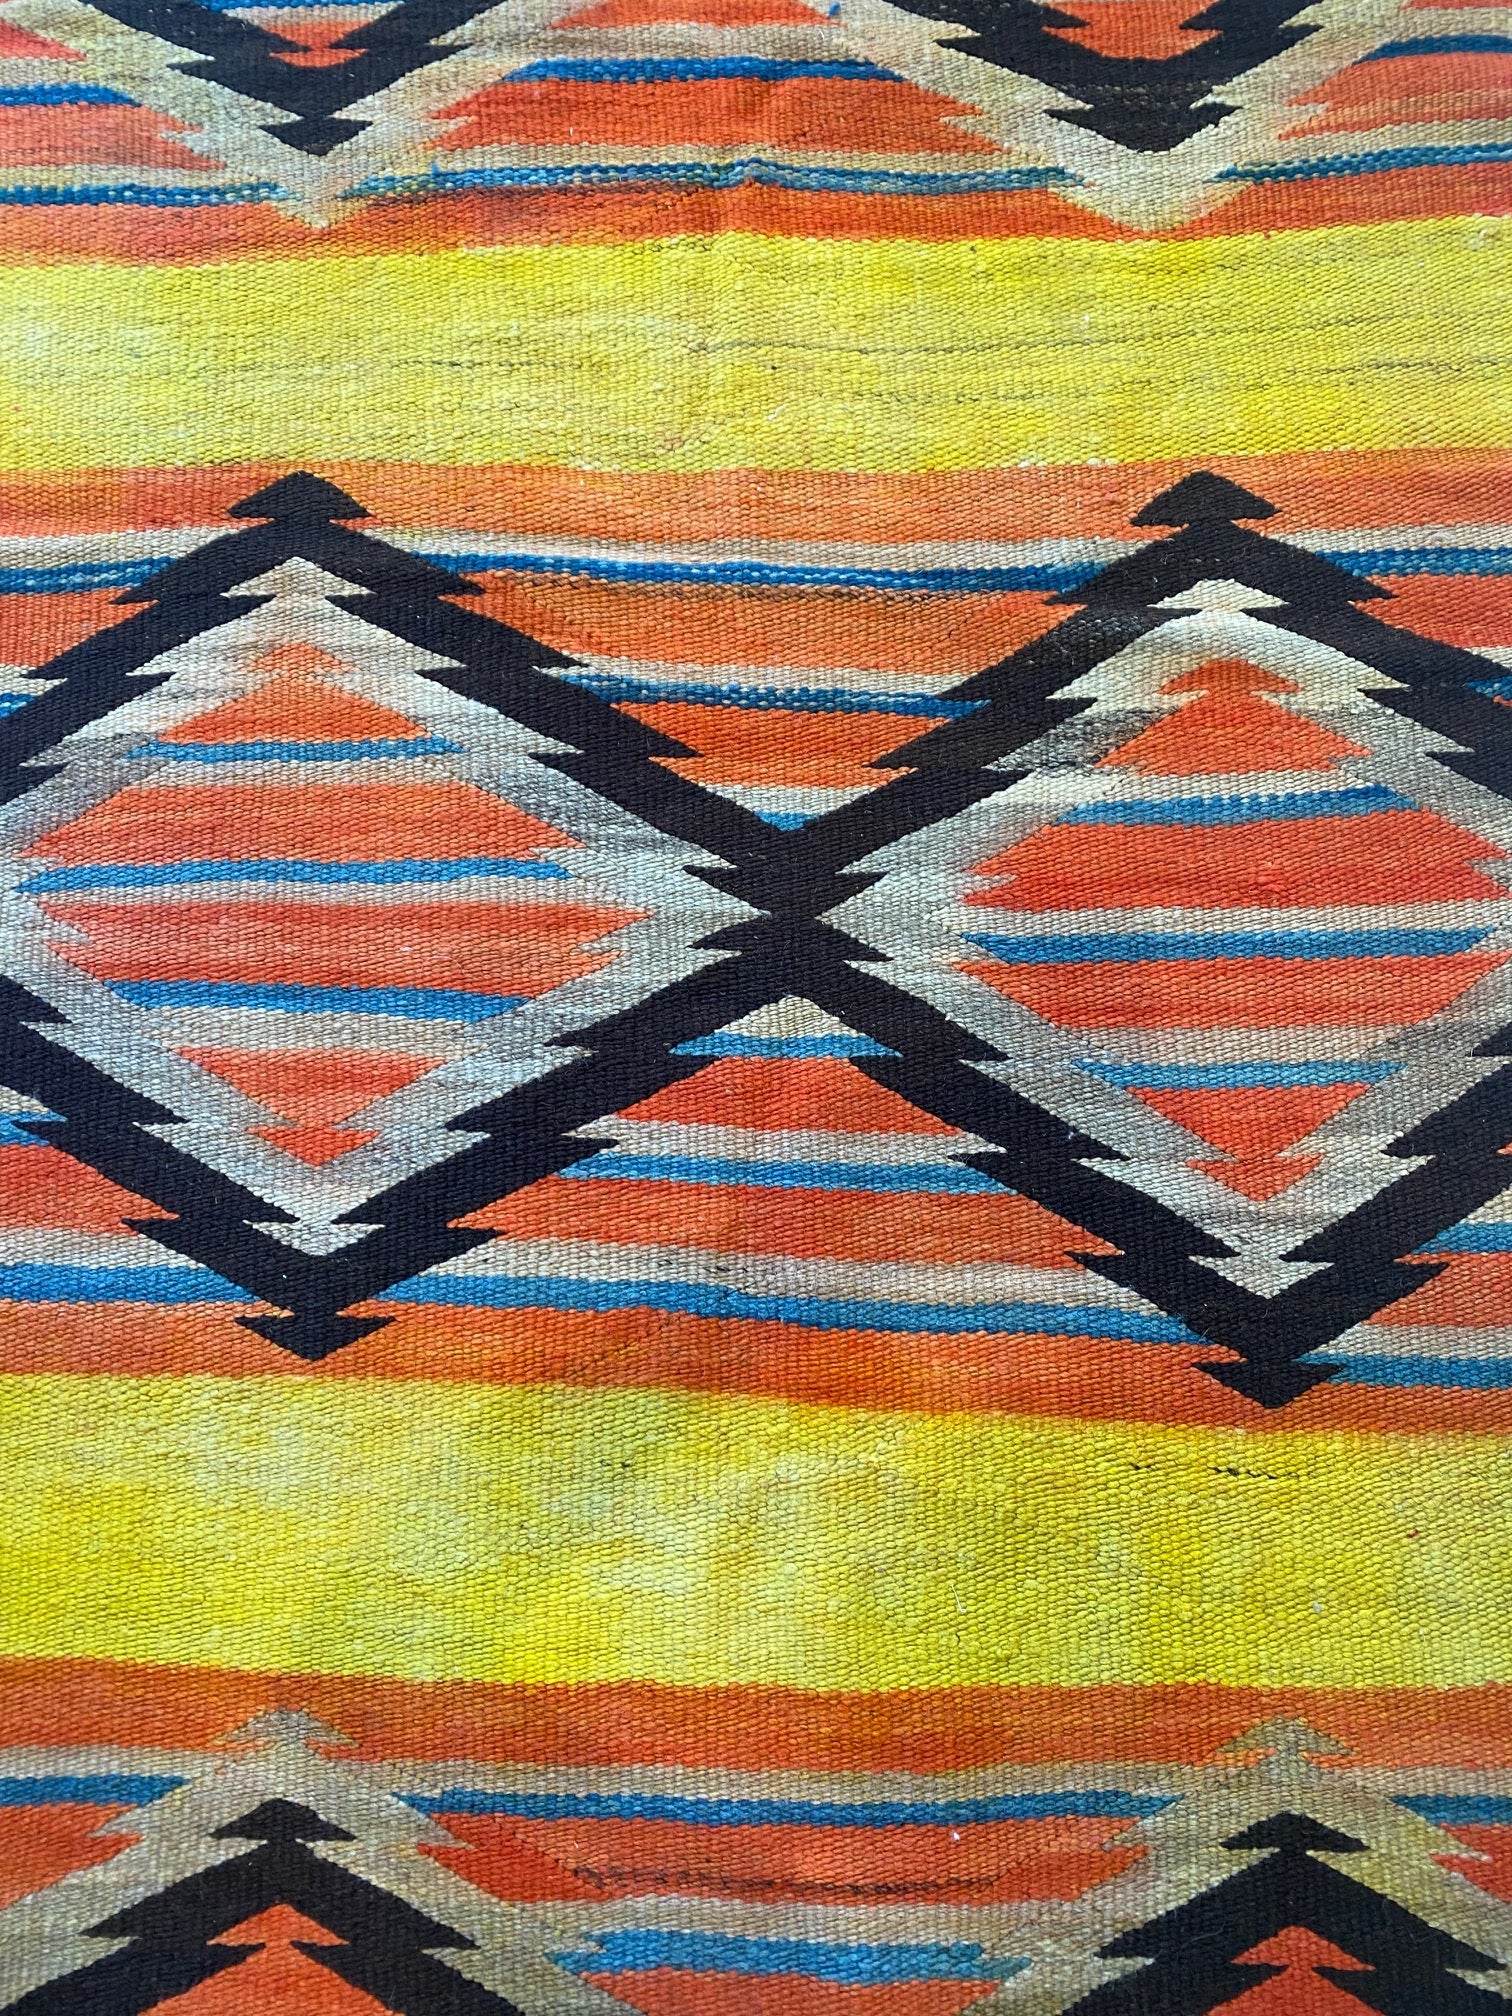 antique navajo wearing blanket, telluride, navajo weaving, rug, native american arts, navajo rug for sale